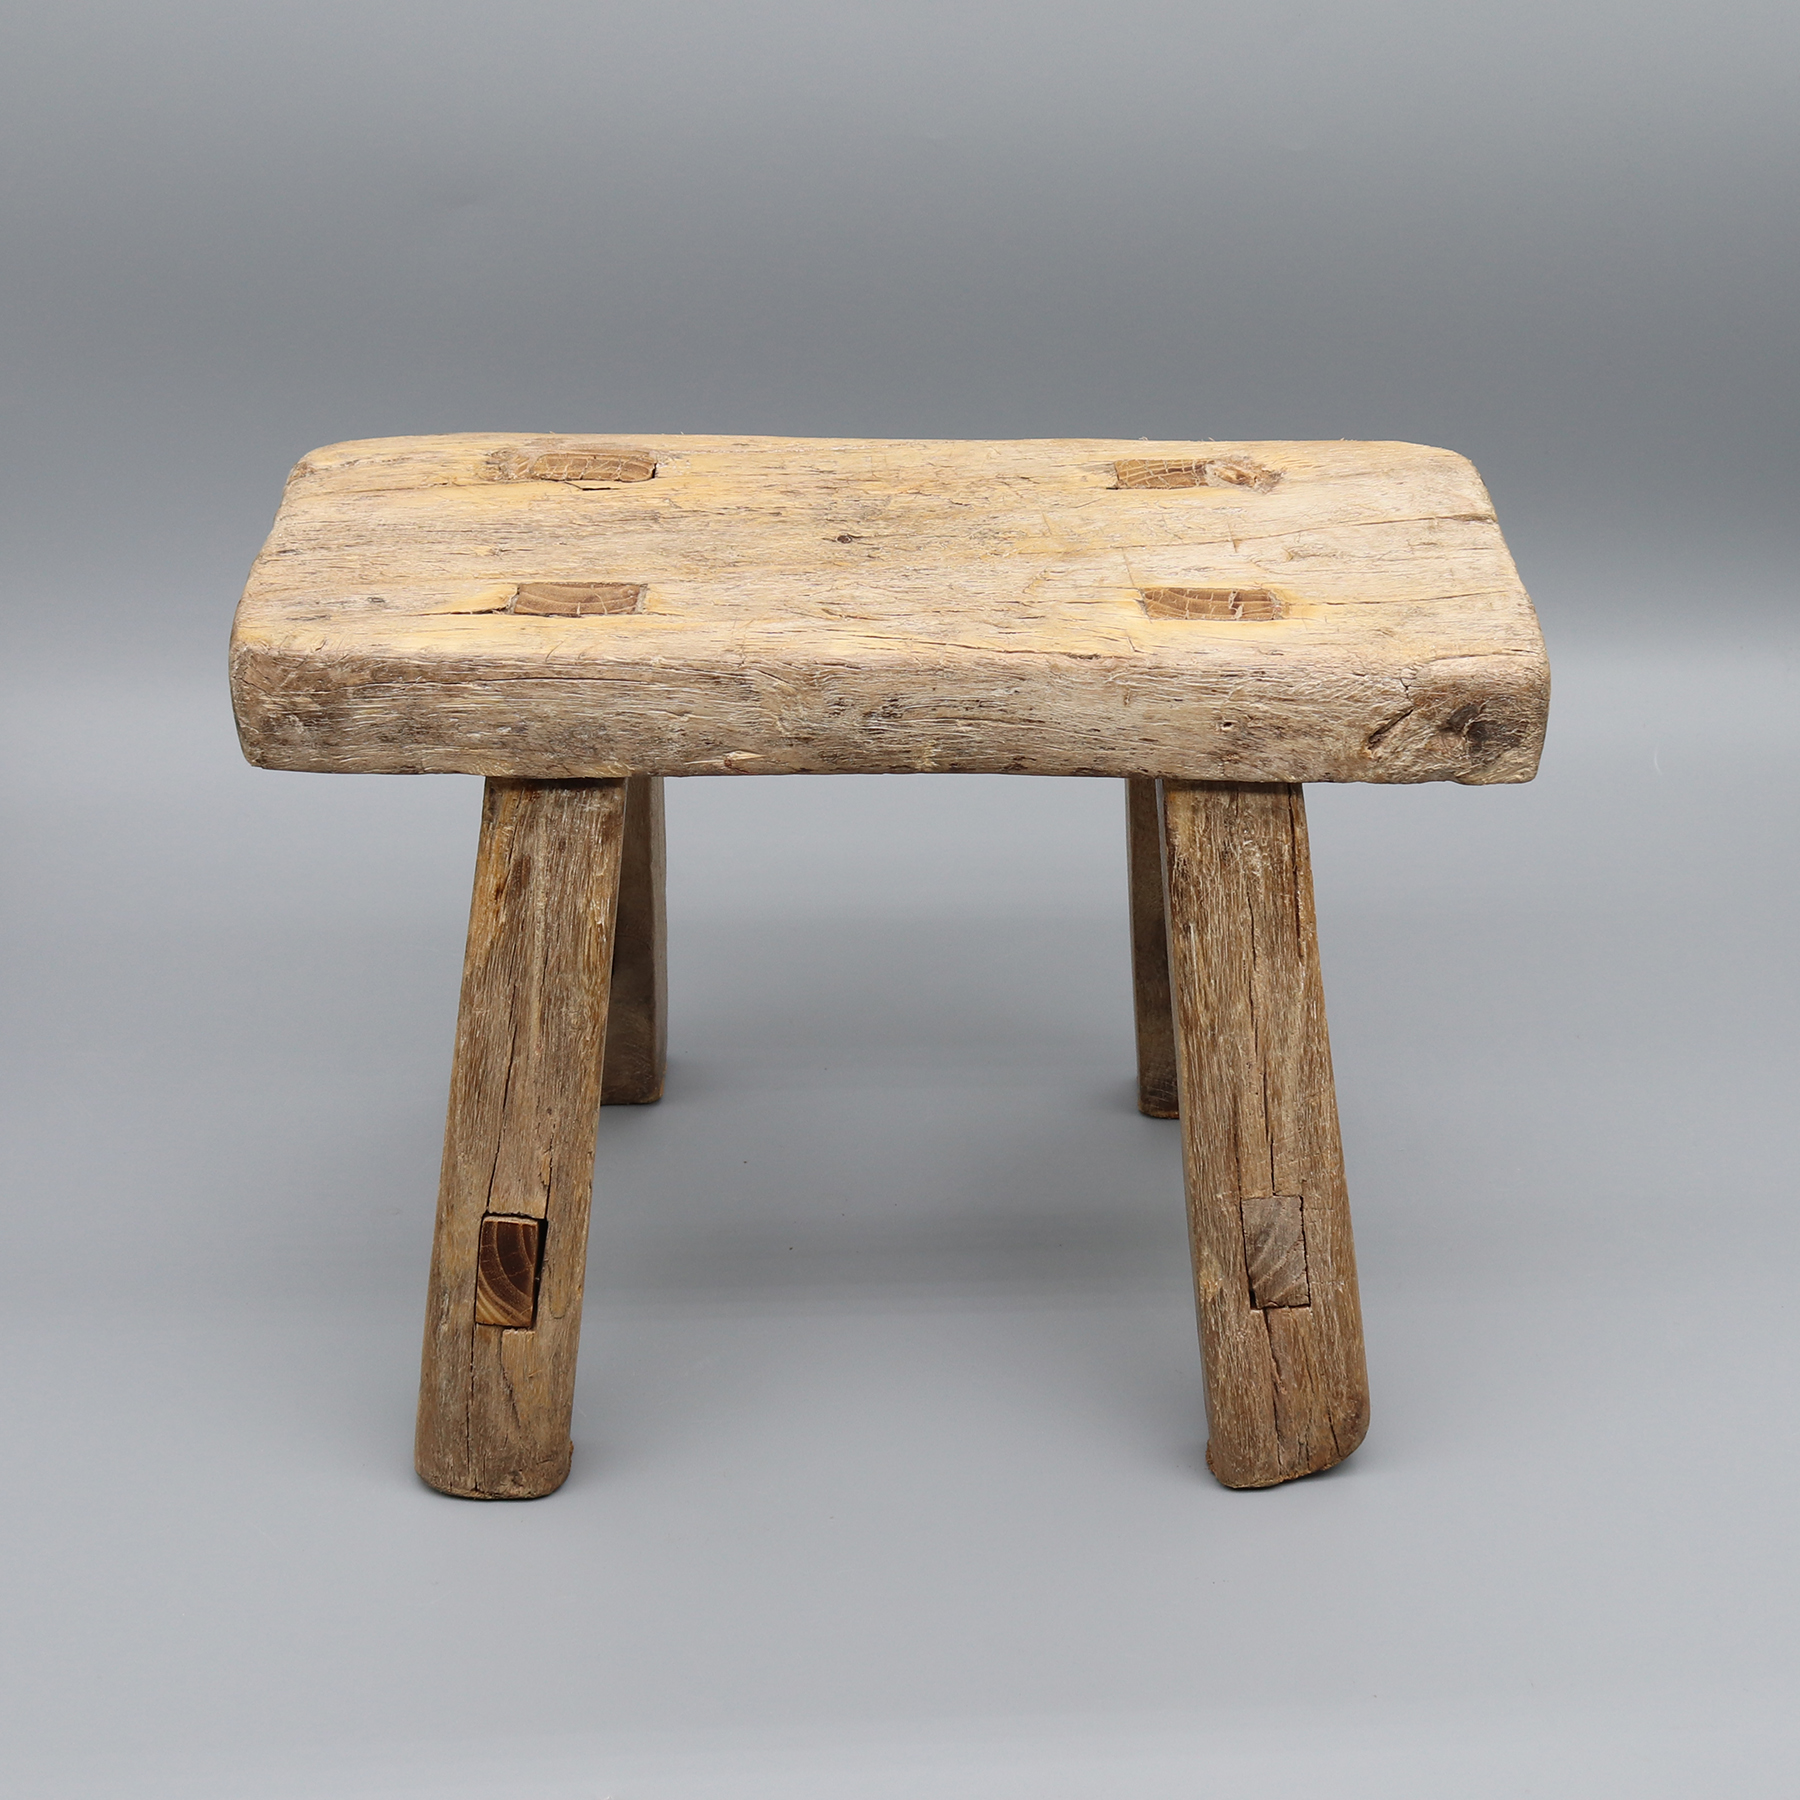 Antieke houten kruk, insteek- en penverbinding, kleine tafel, plantenstandaard, massief hout